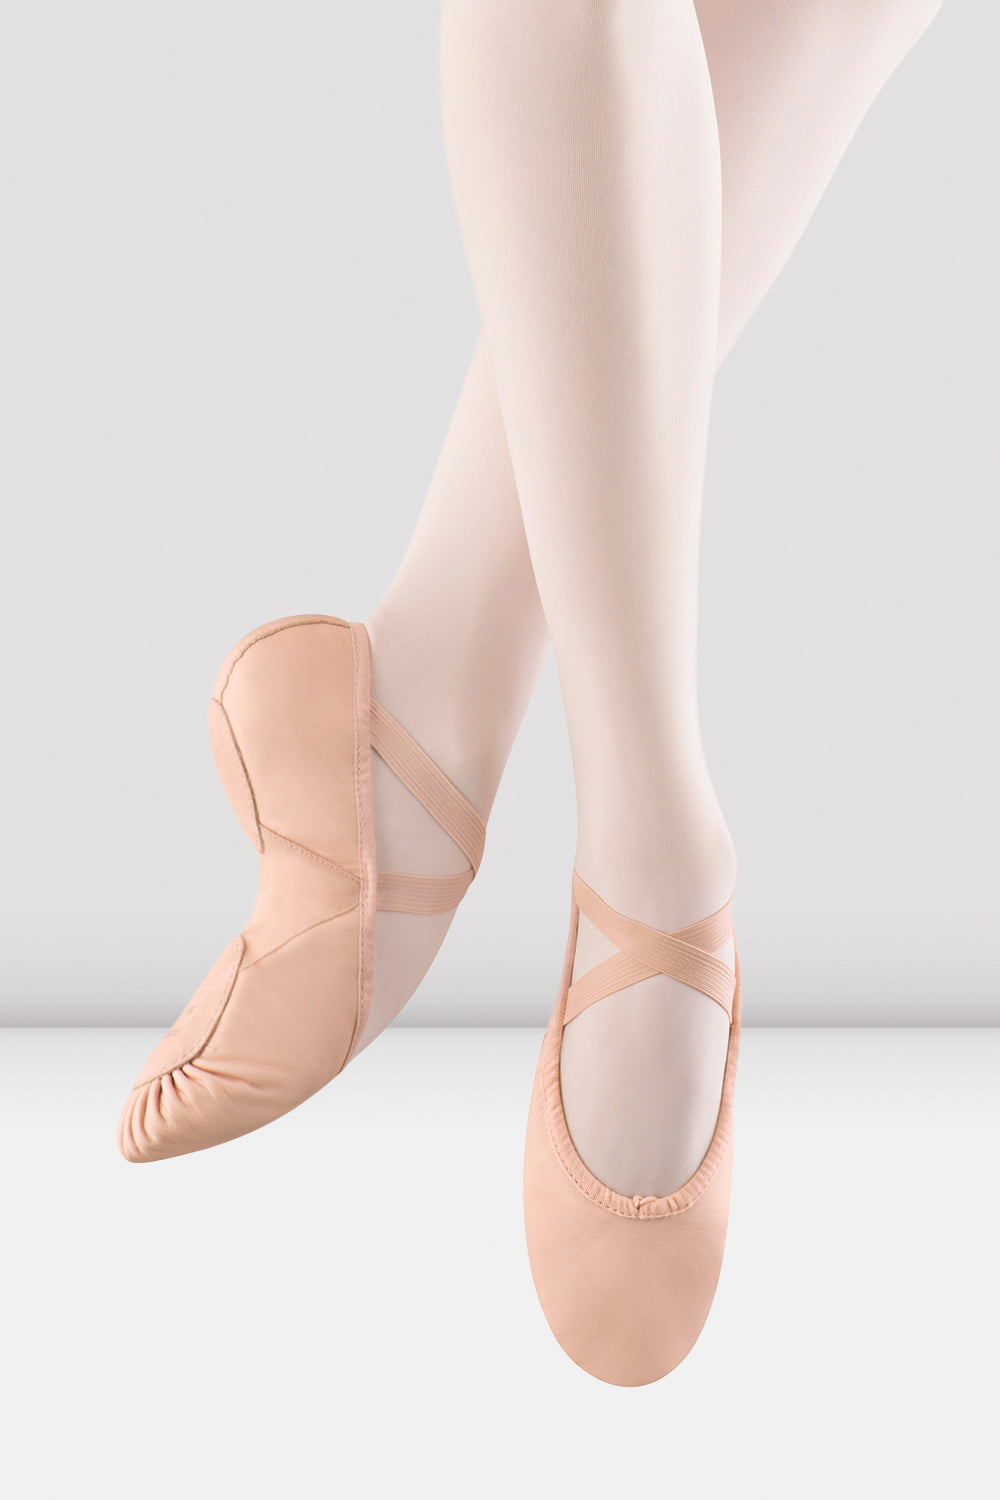 BLOCH Ladies Prolite 2 Hybrid Ballet Shoes, Pink Leather